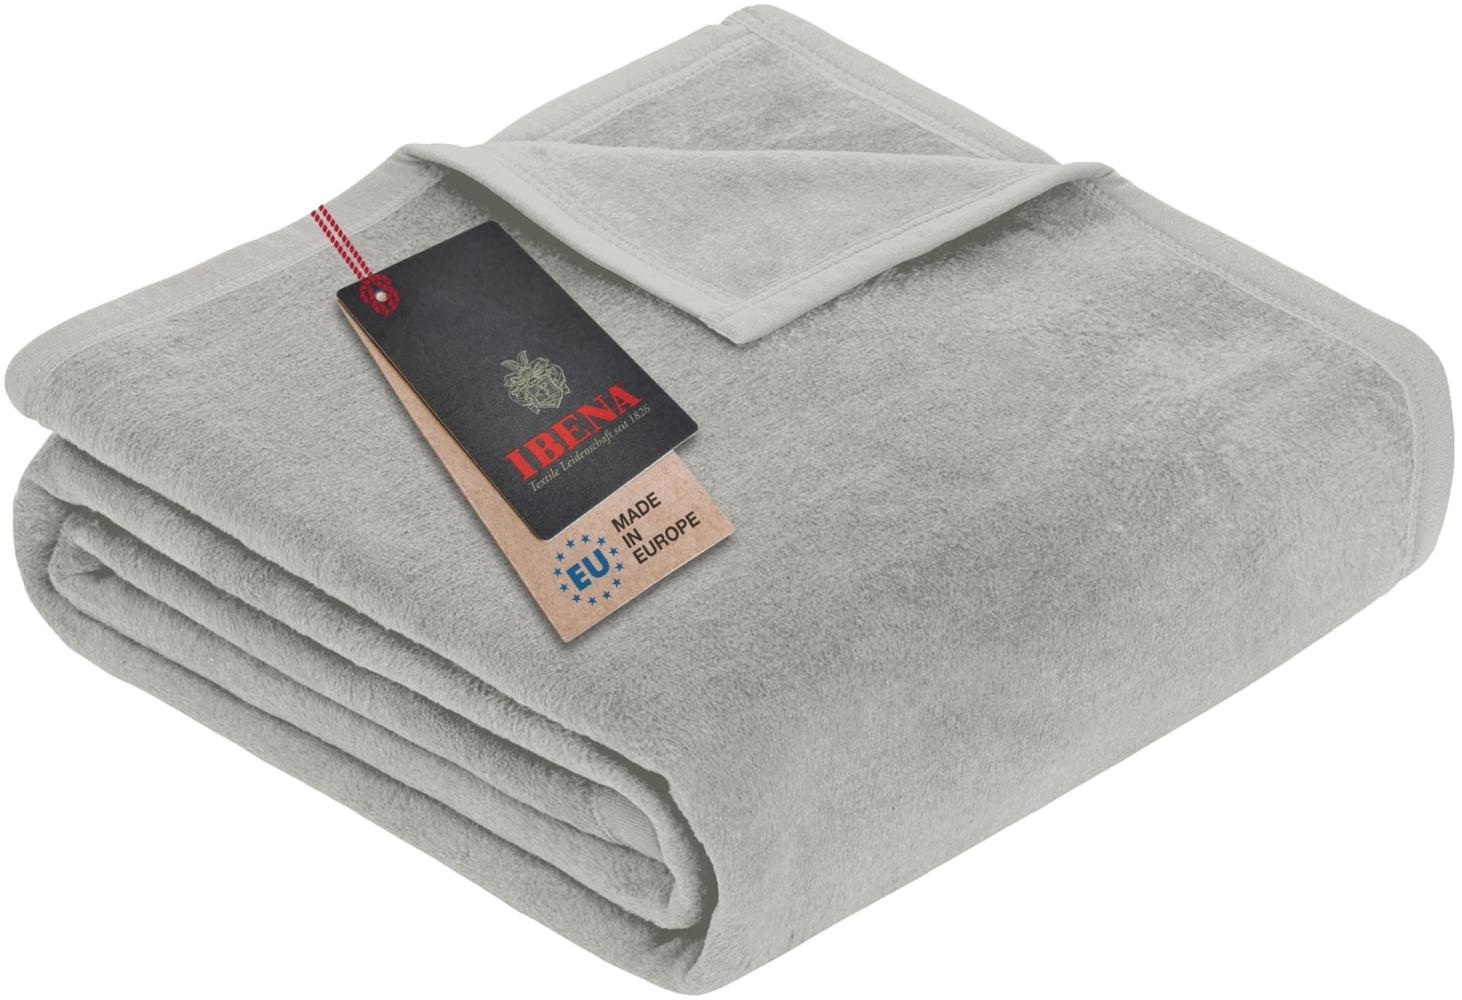 Ibena Porto XXL Decke 180x220 cm – Baumwollmischung weich, warm & waschbar, Tagesdecke hellgrau einfarbig Bild 1